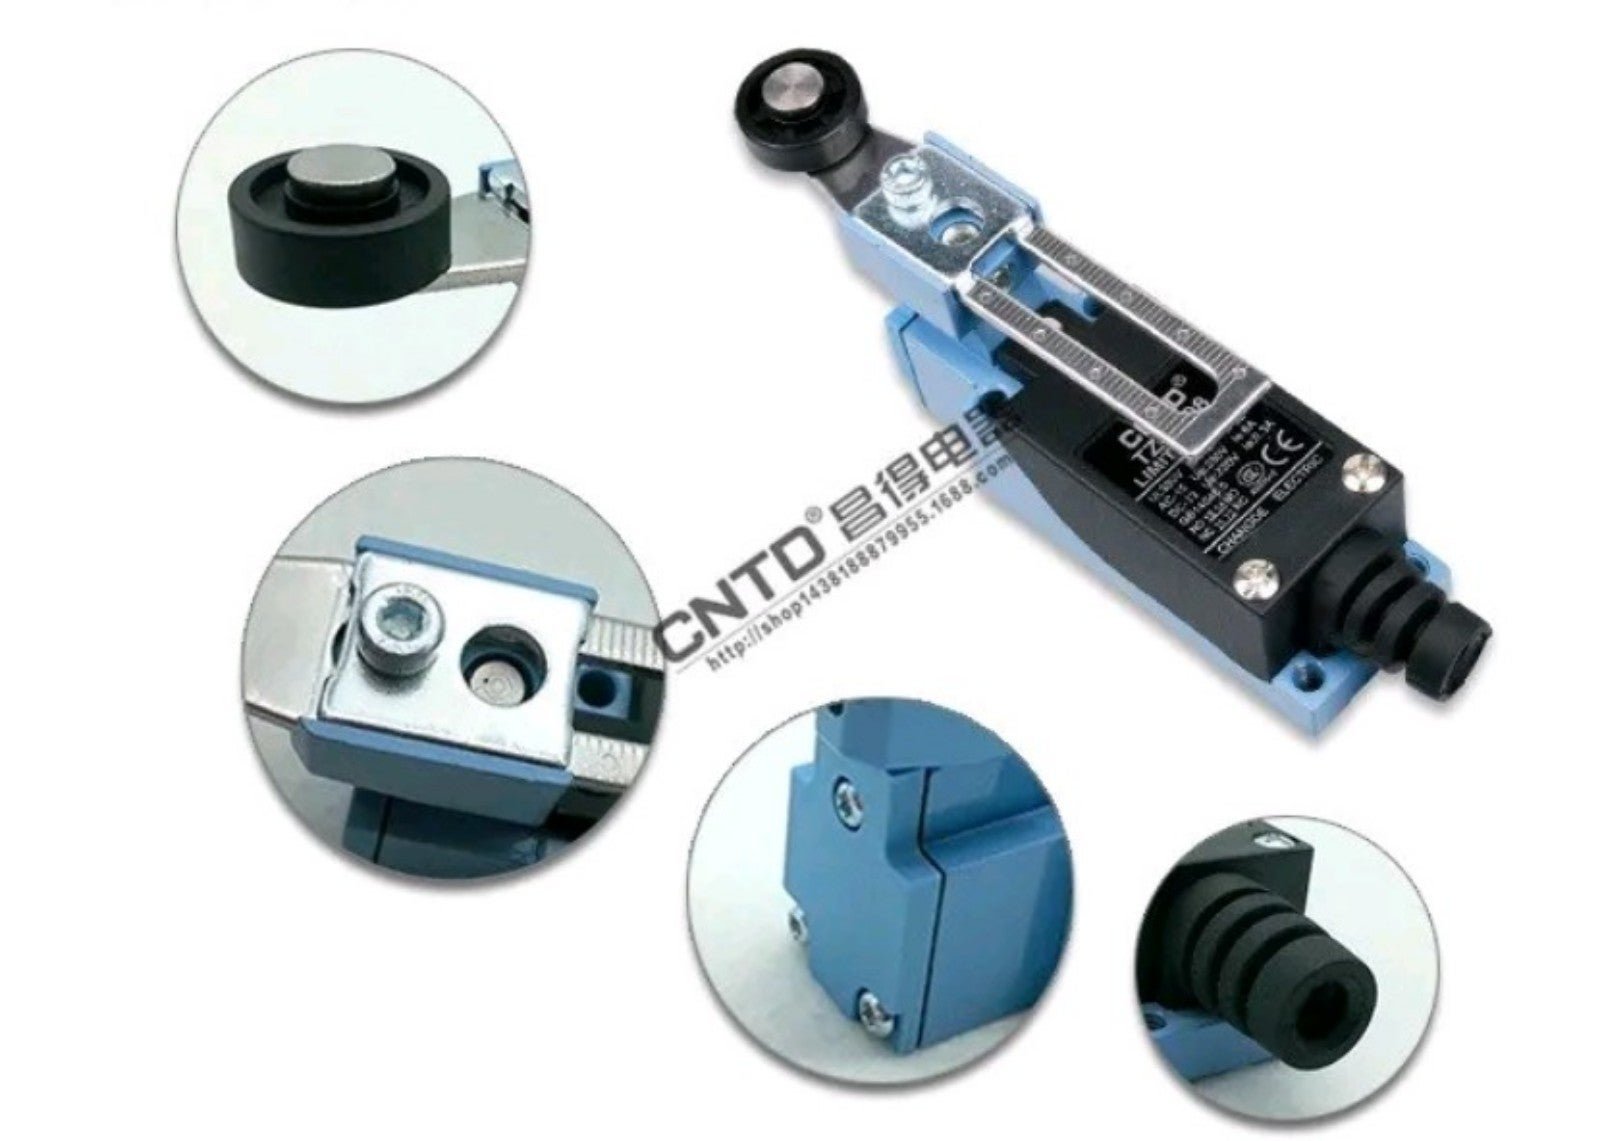 2 CNTD TZ-8108 Adjustable Roller Lever Arm arduino Limit Switch CNC Mill Plasma gdpEl1V7O